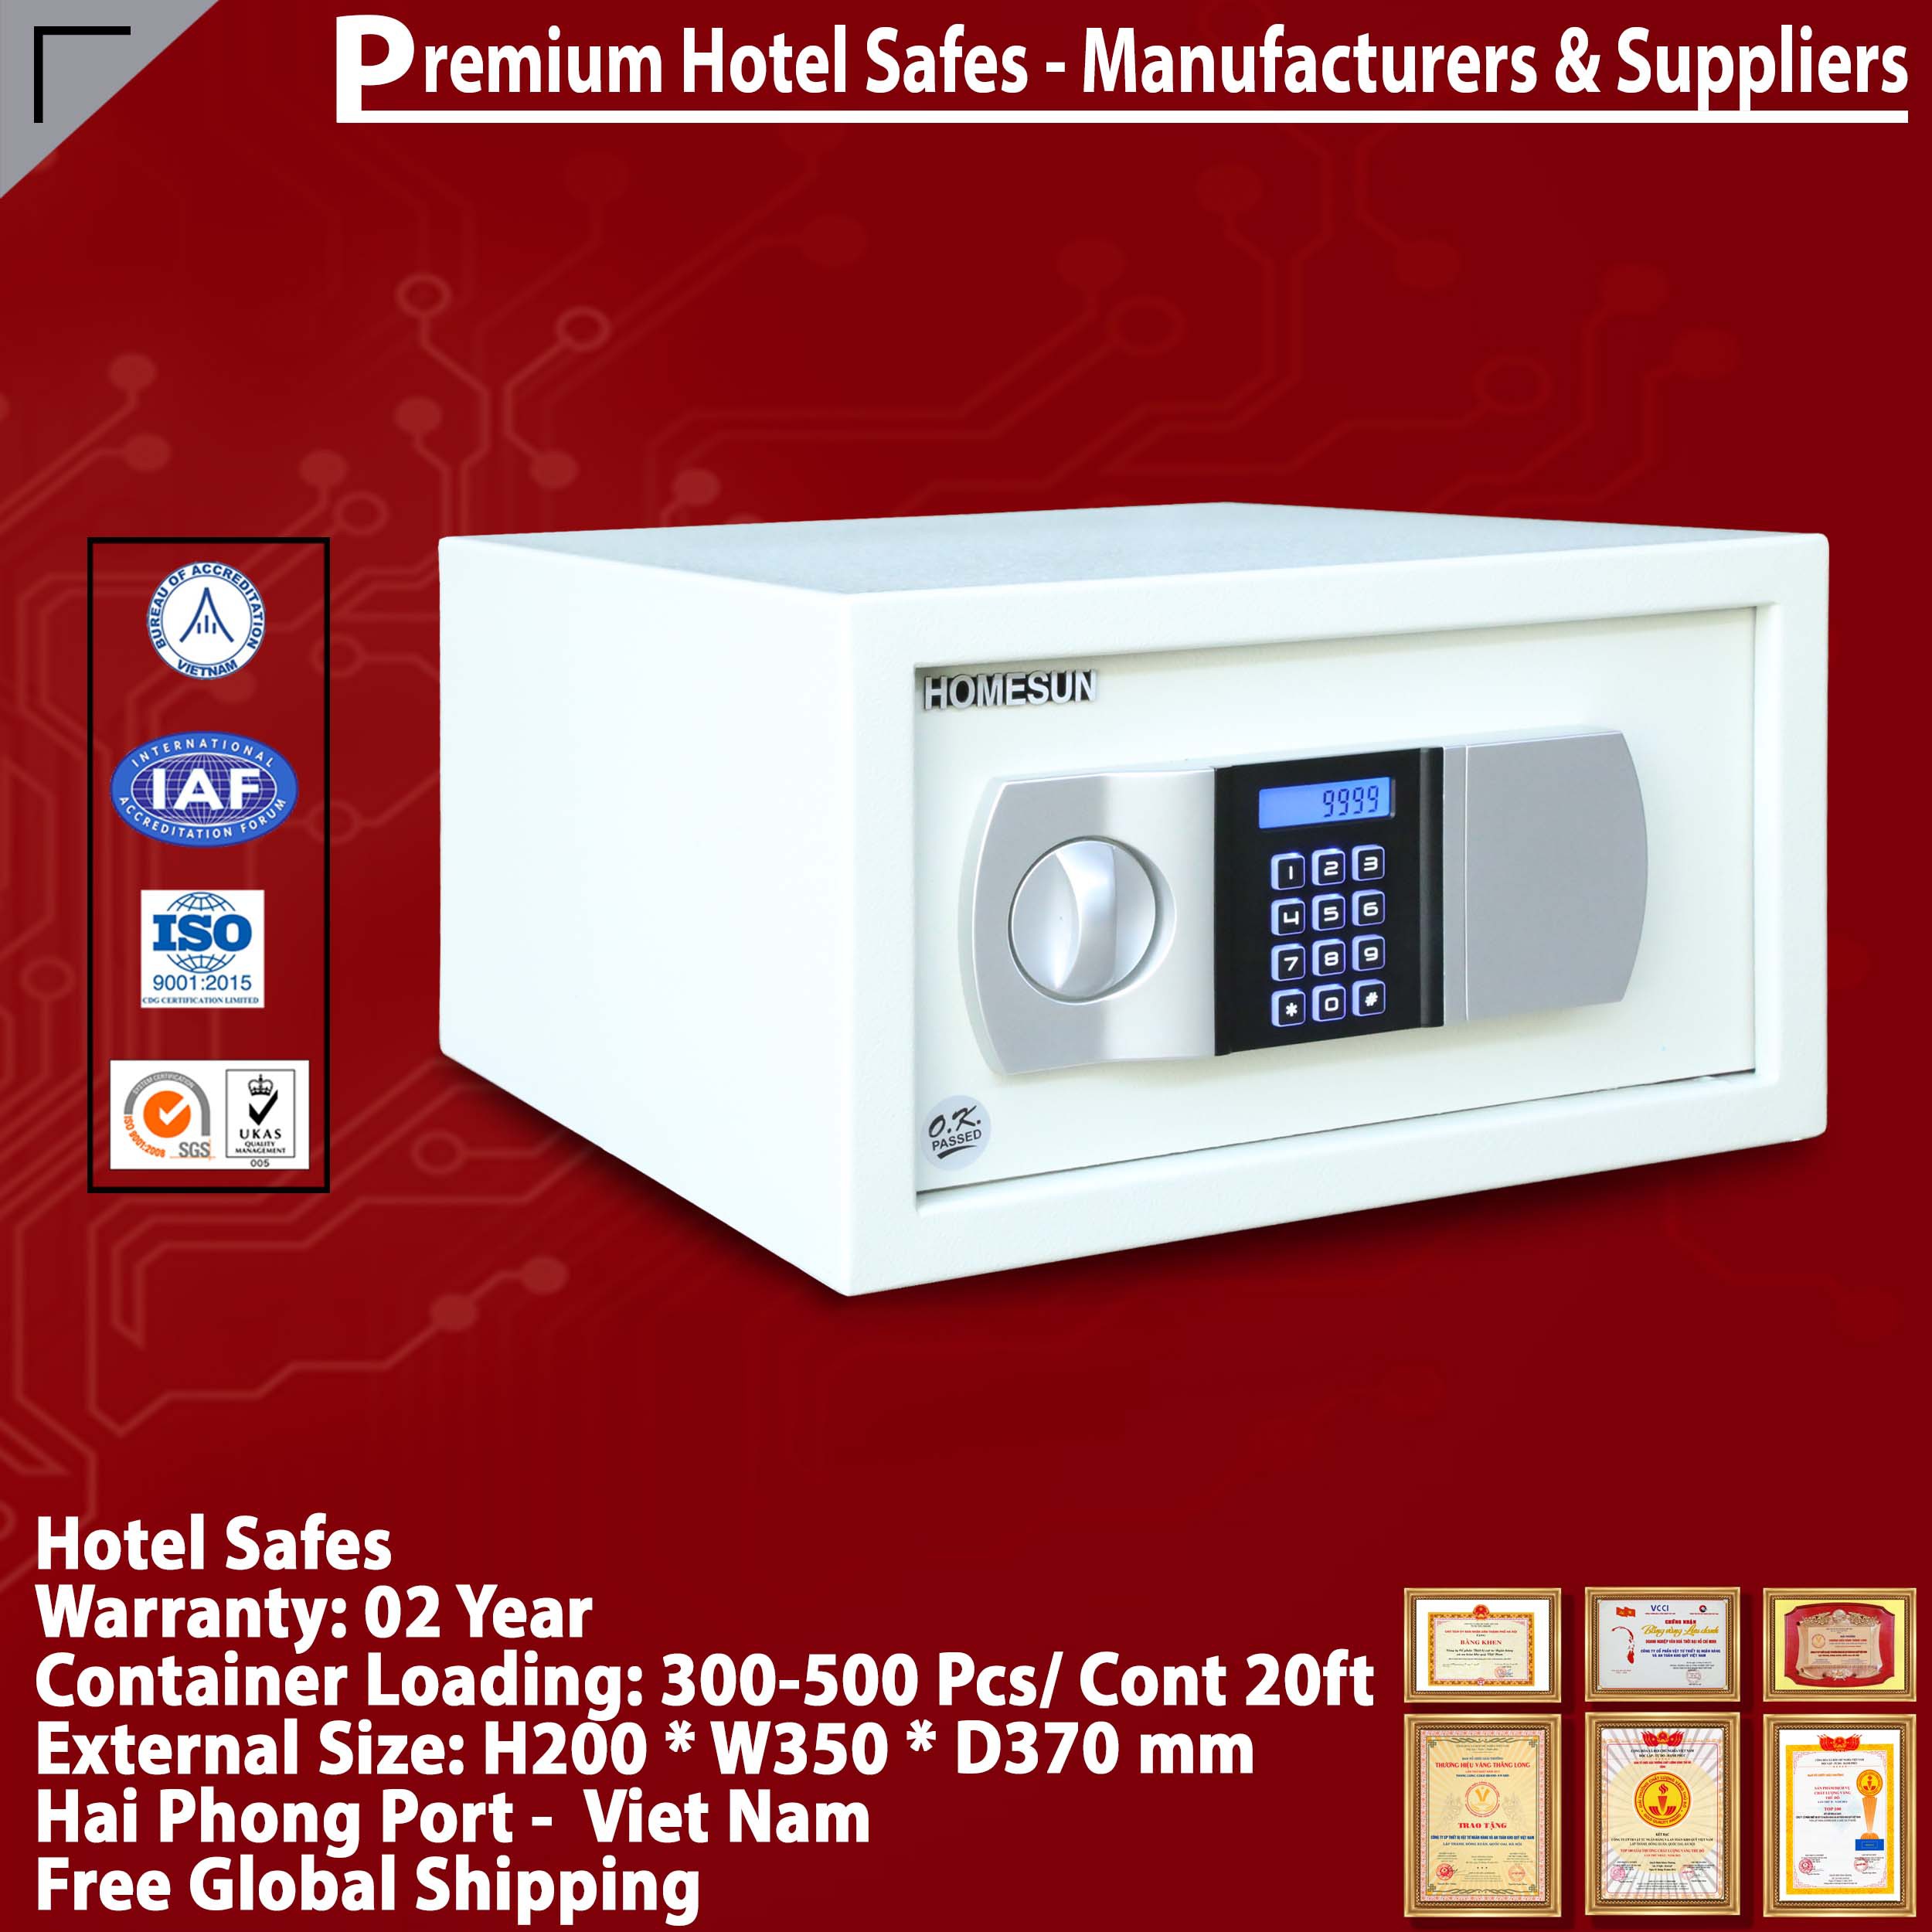 Hotel Safes Resort Manufacturers & Suppliers‎